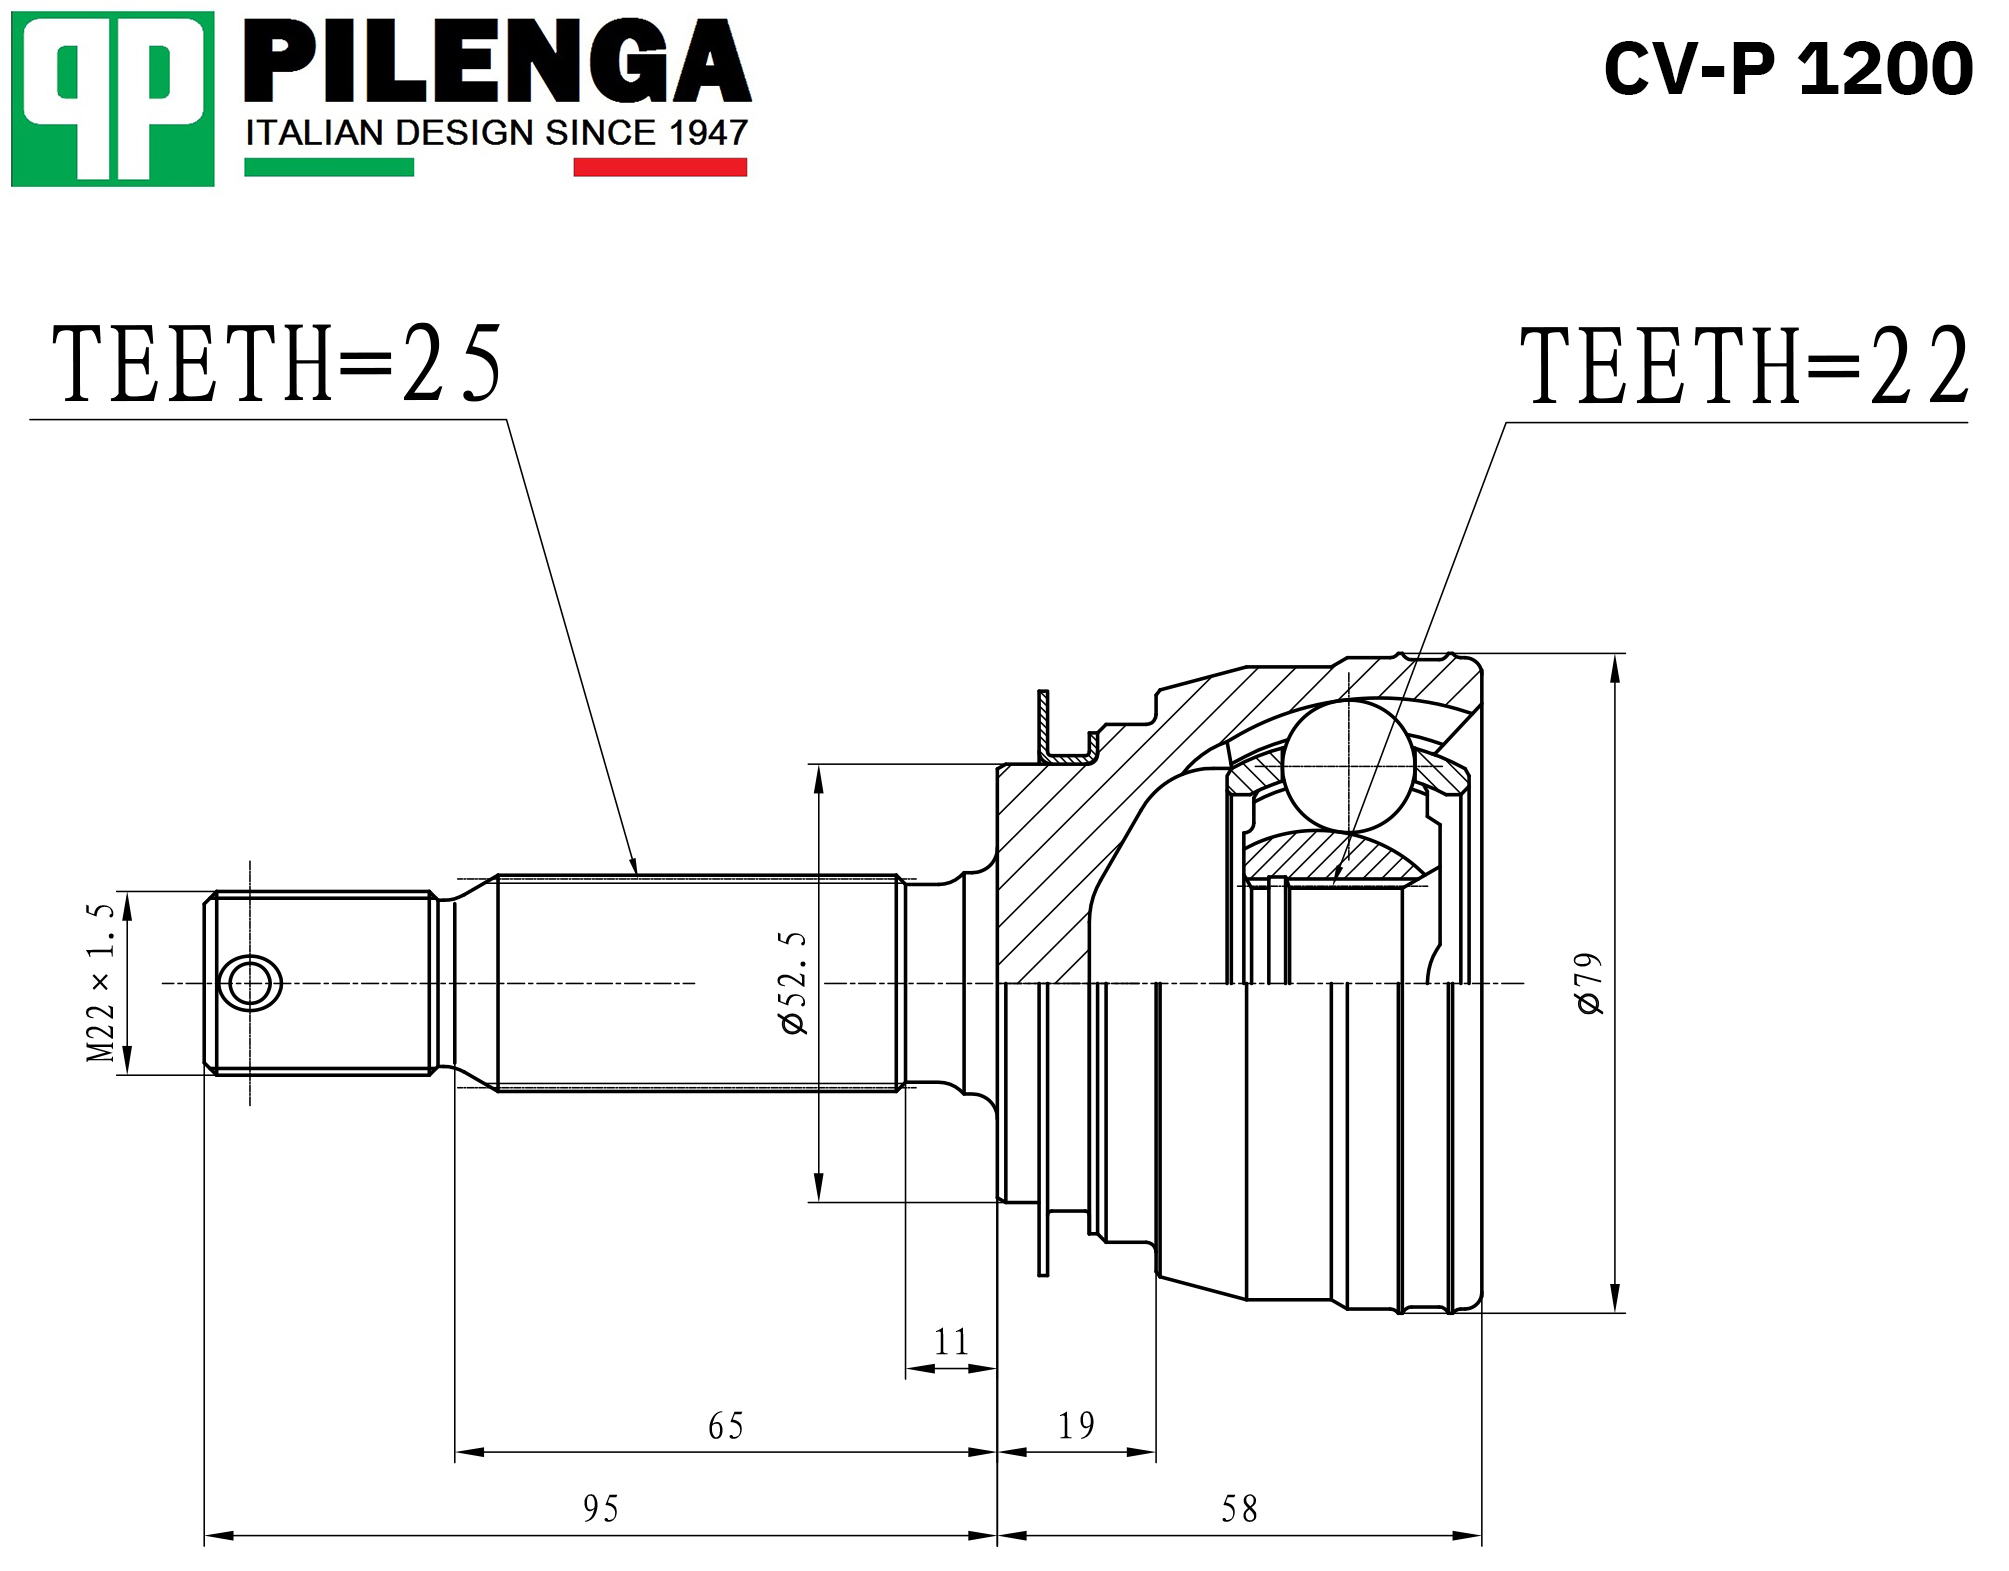 PILENGA CV-P 1200